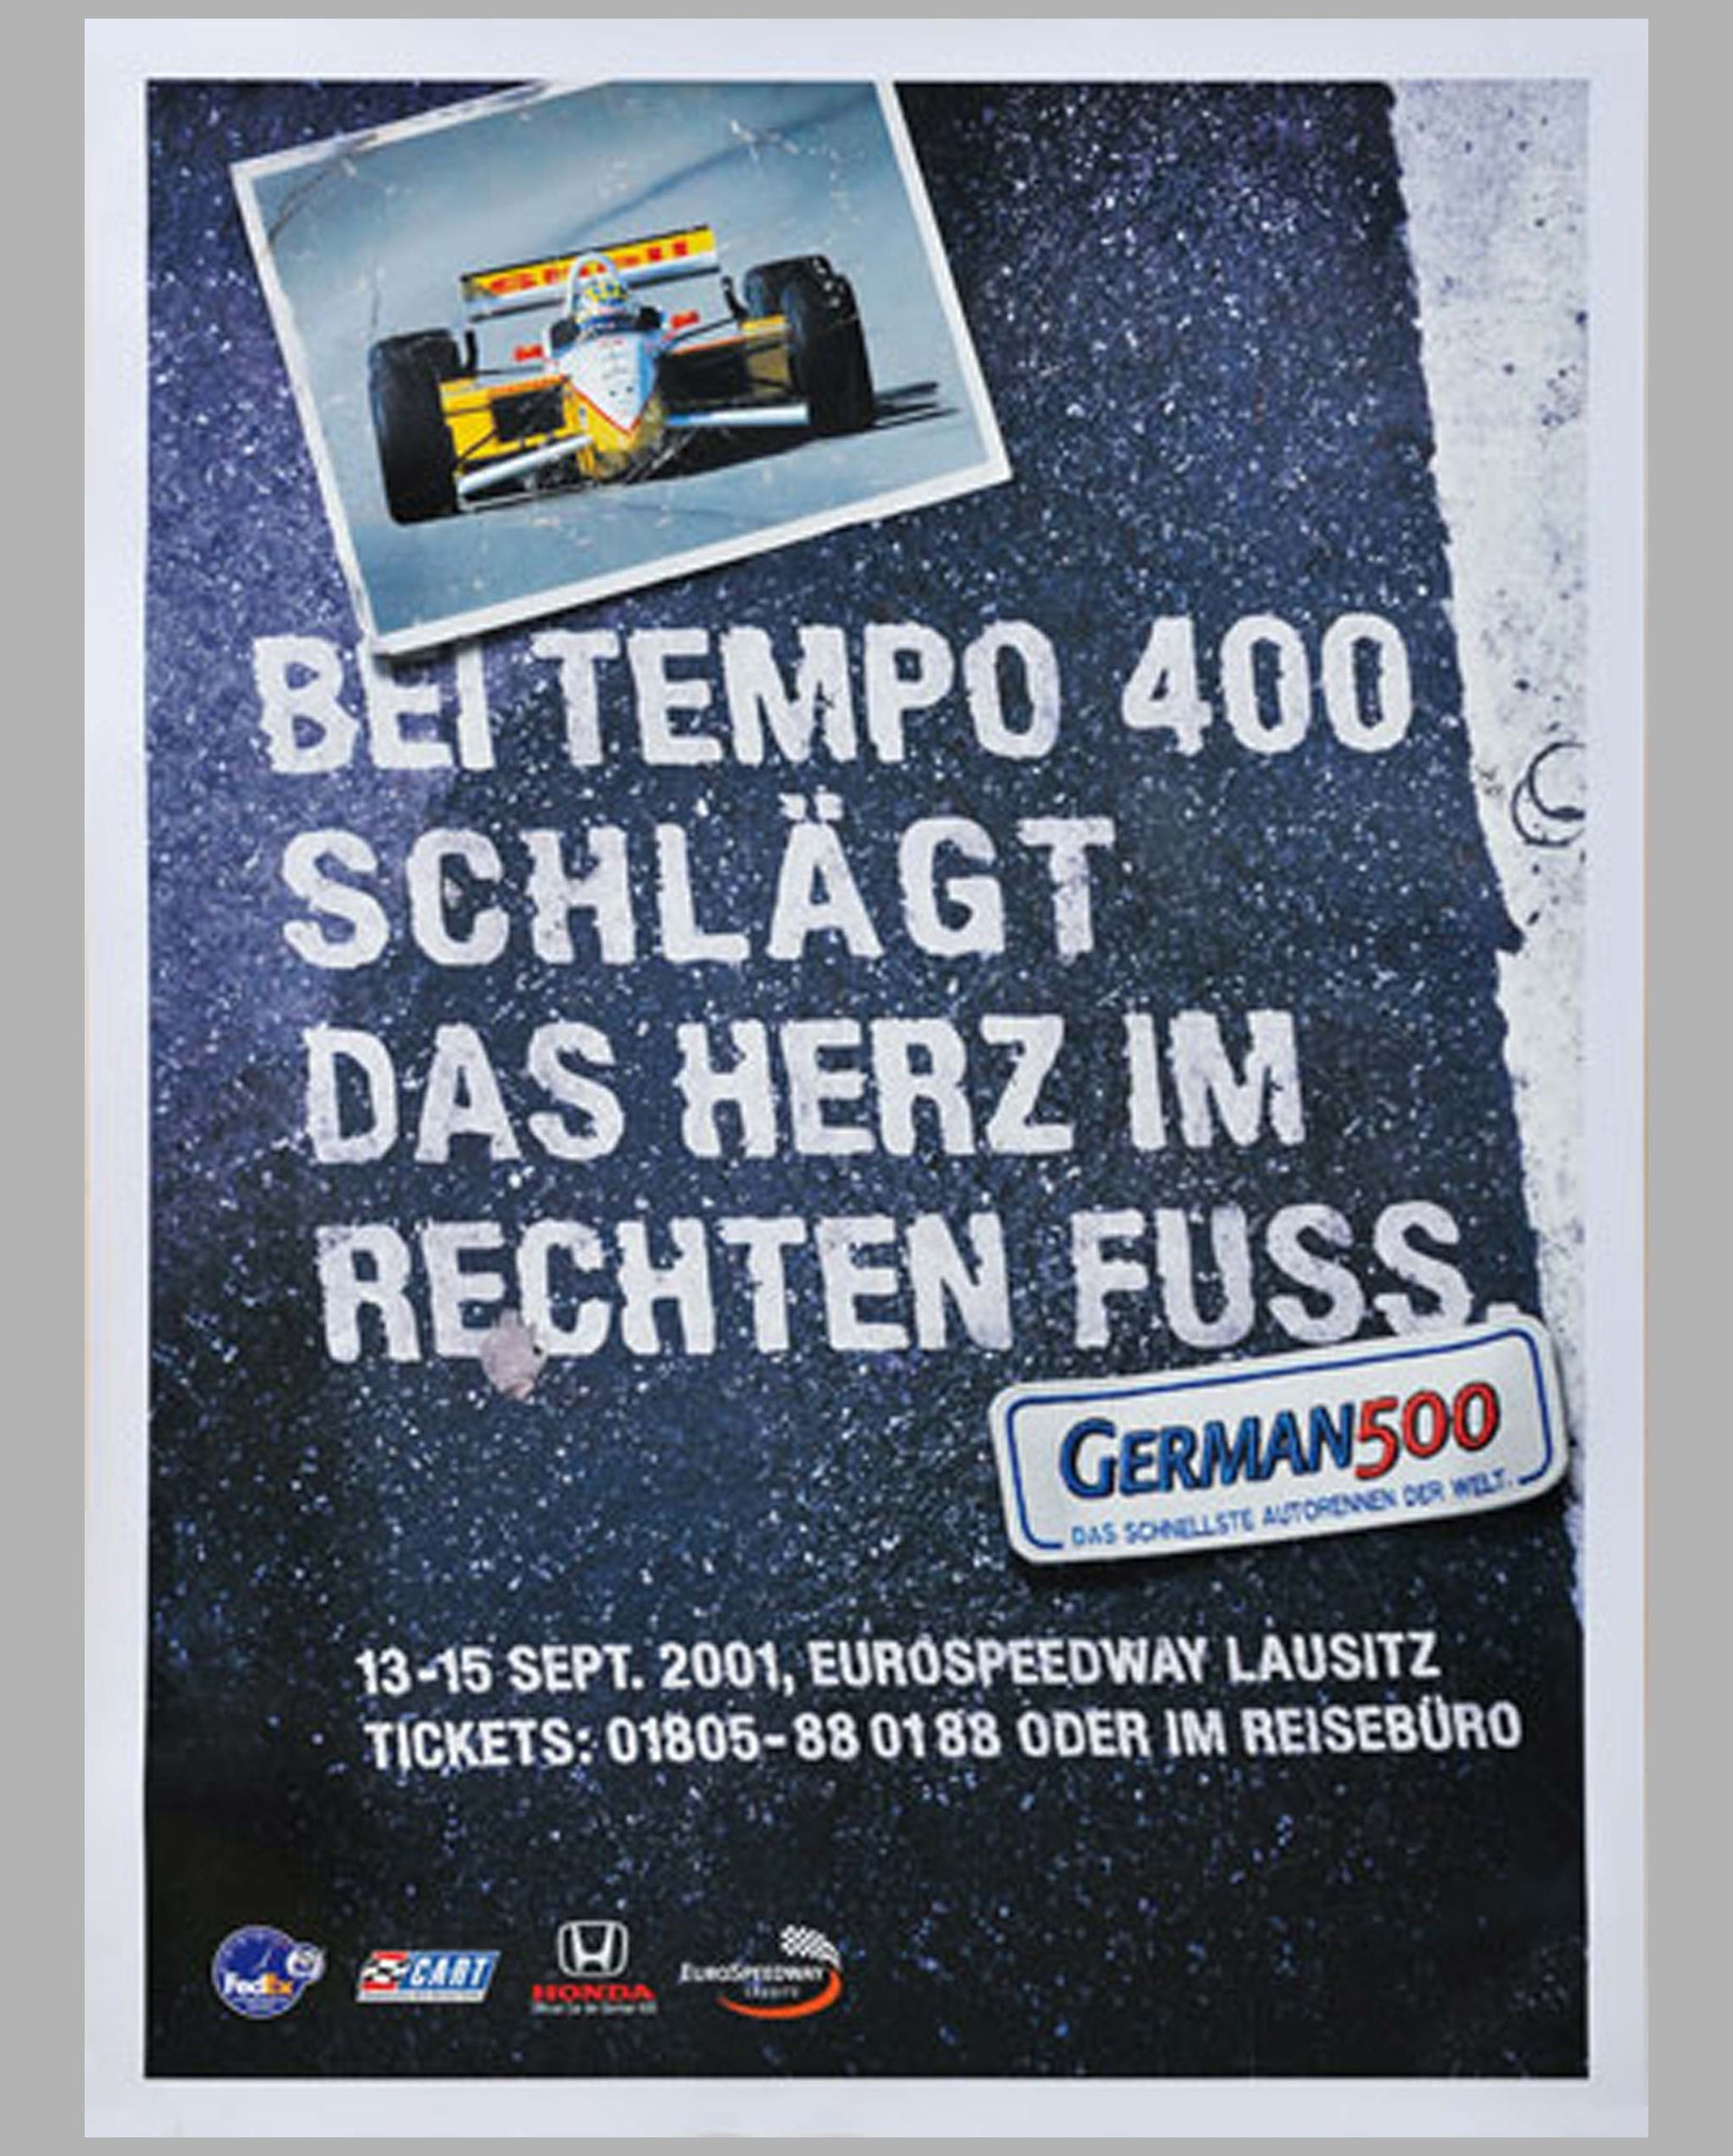 German 500 2001 original event poster